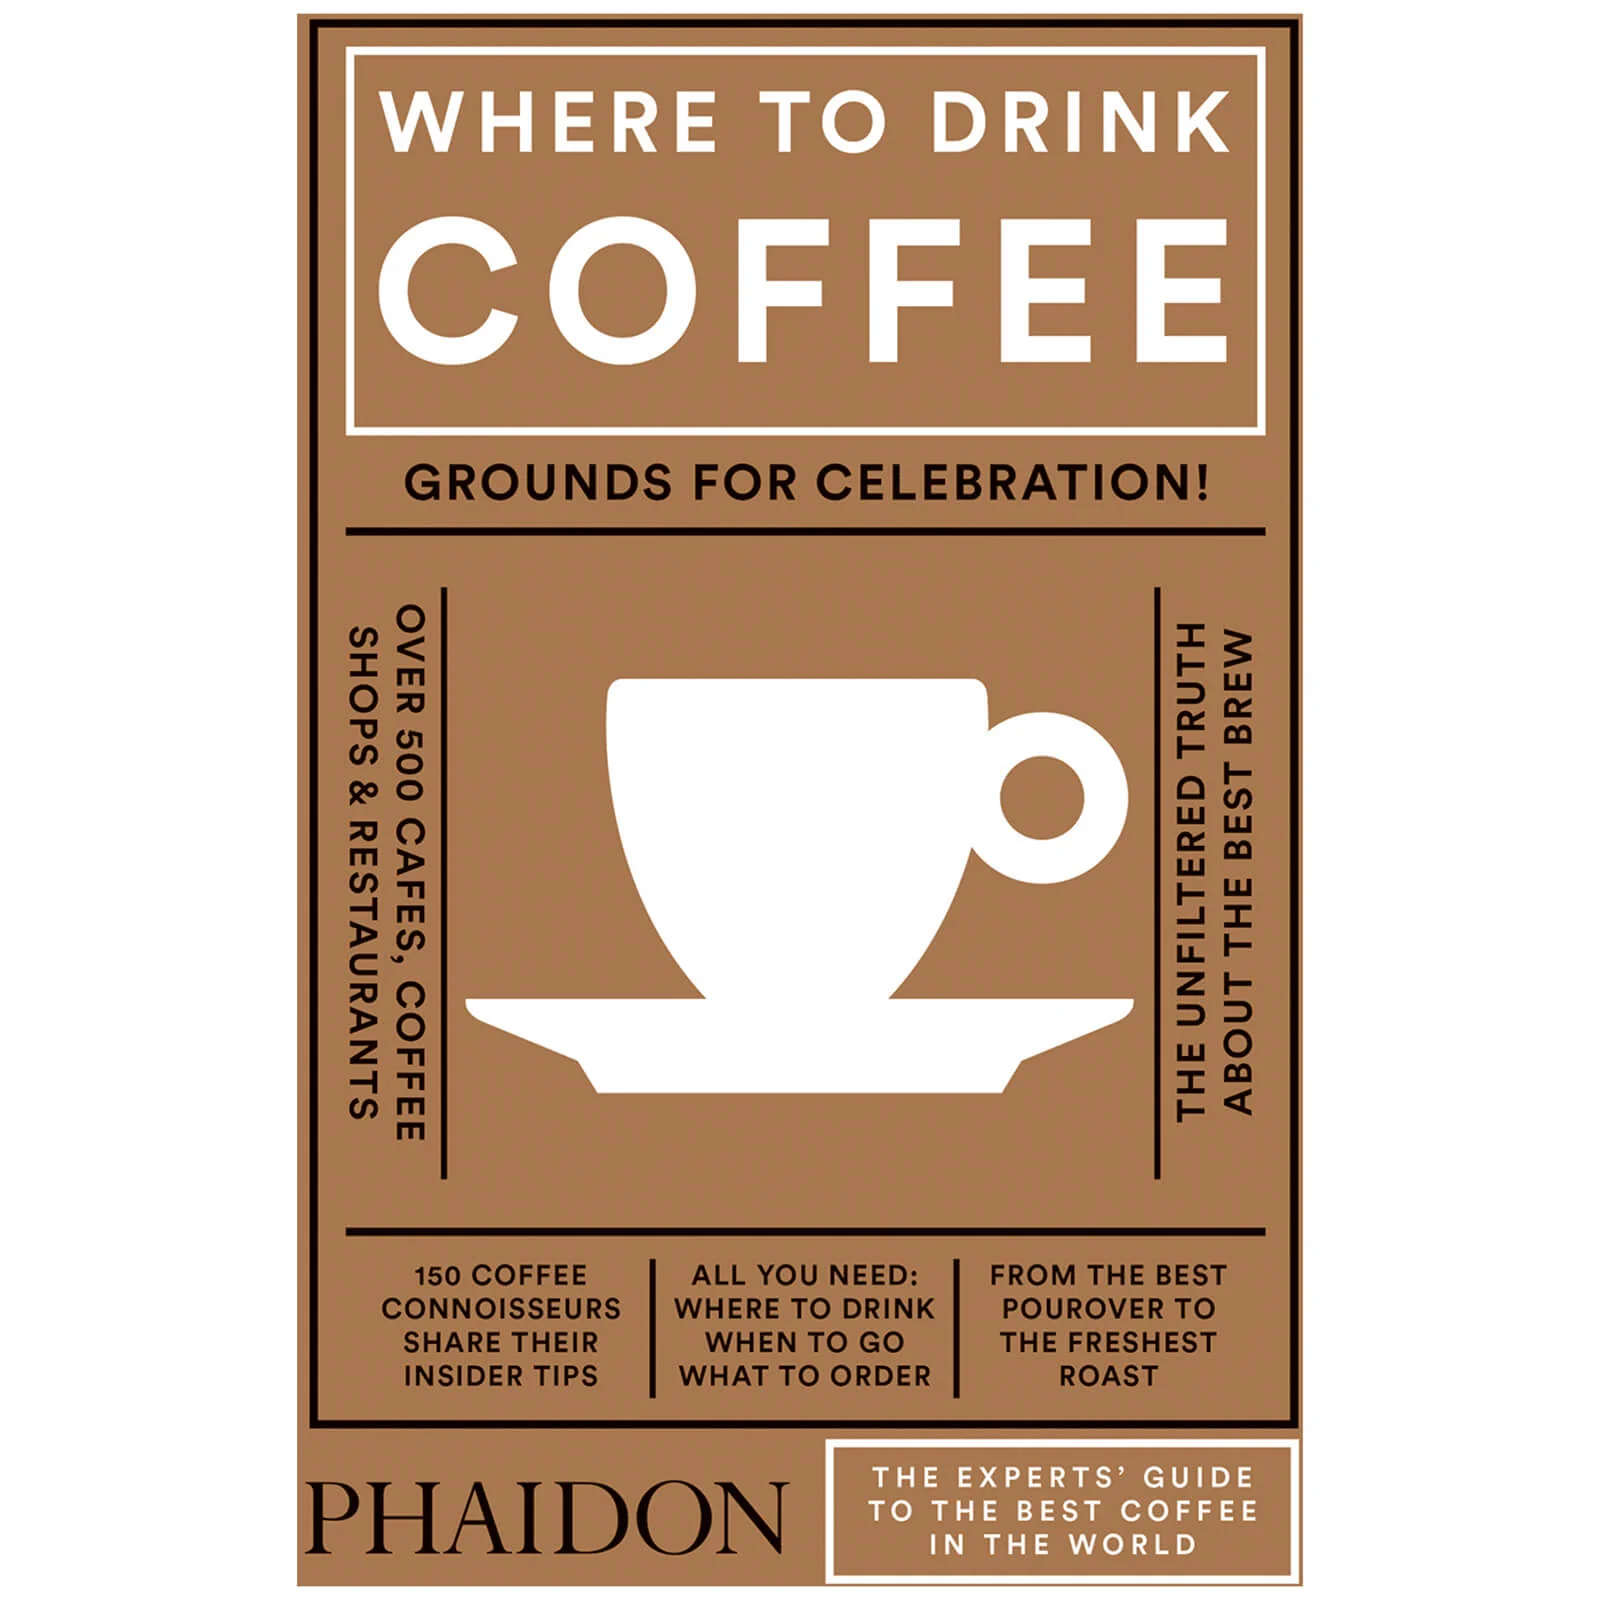 Phaidon Books: Where to Drink Coffee Image 1